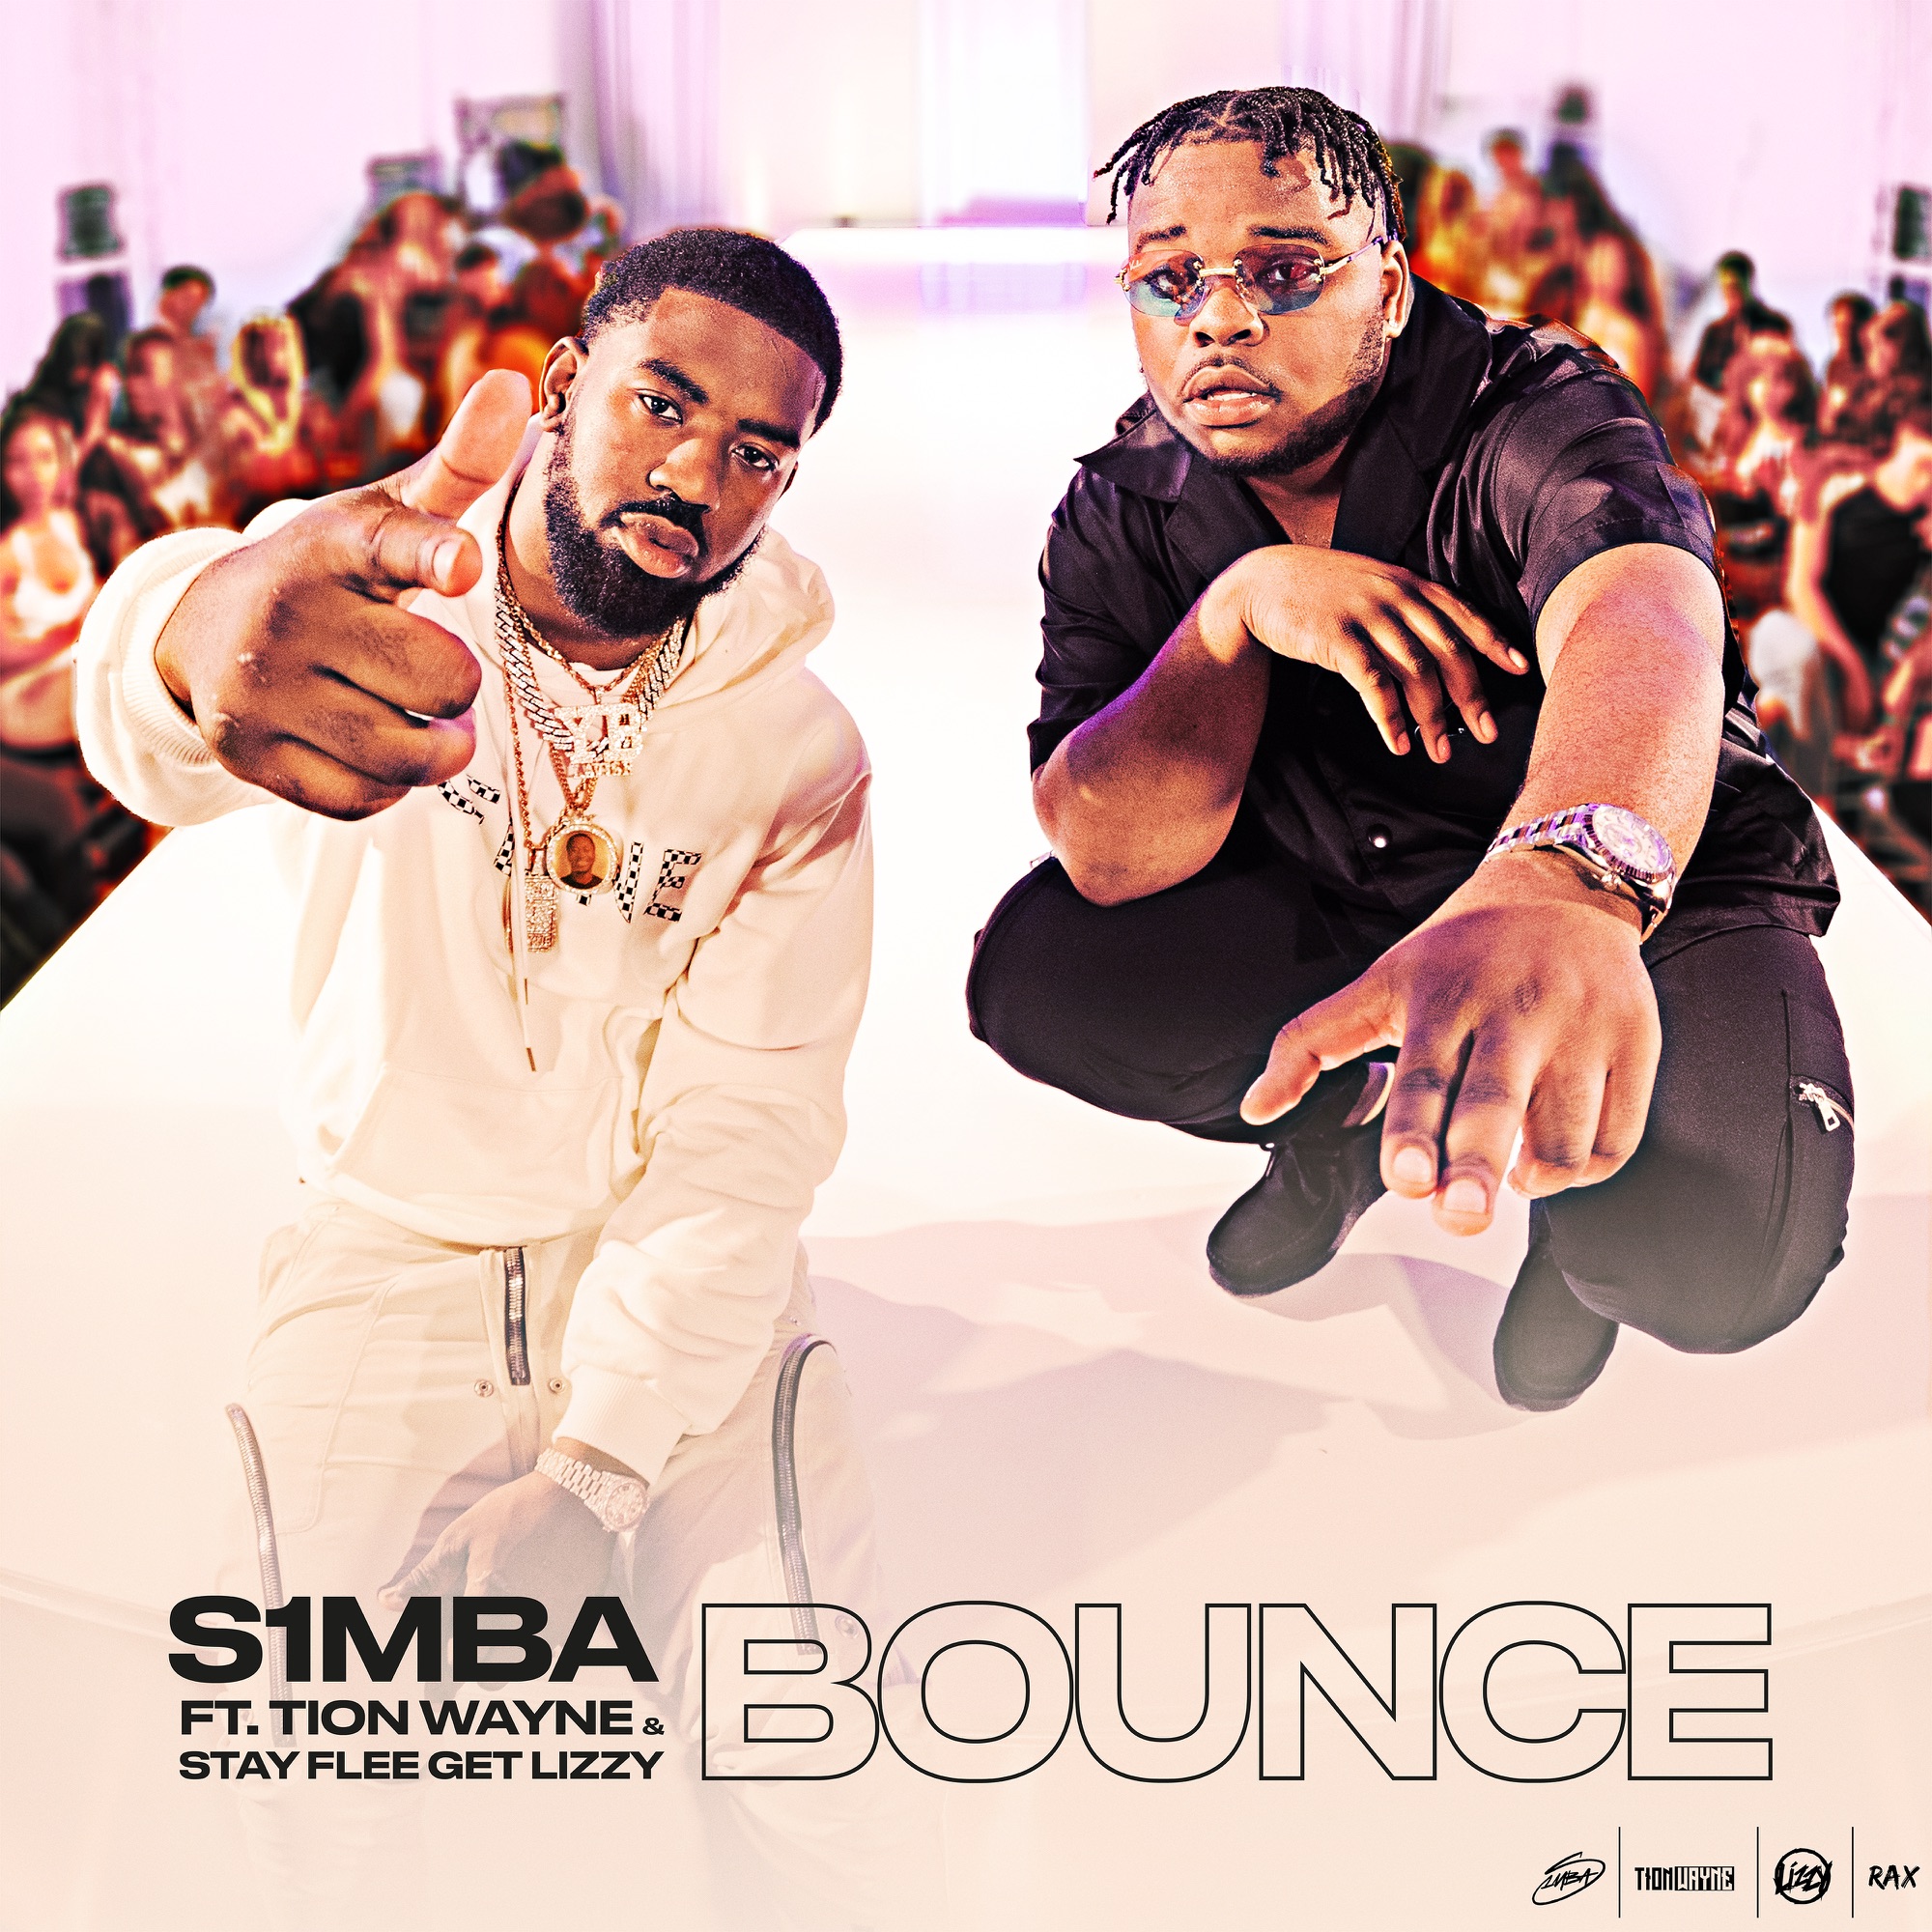 S1mba - Bounce (feat. Tion Wayne) - Single